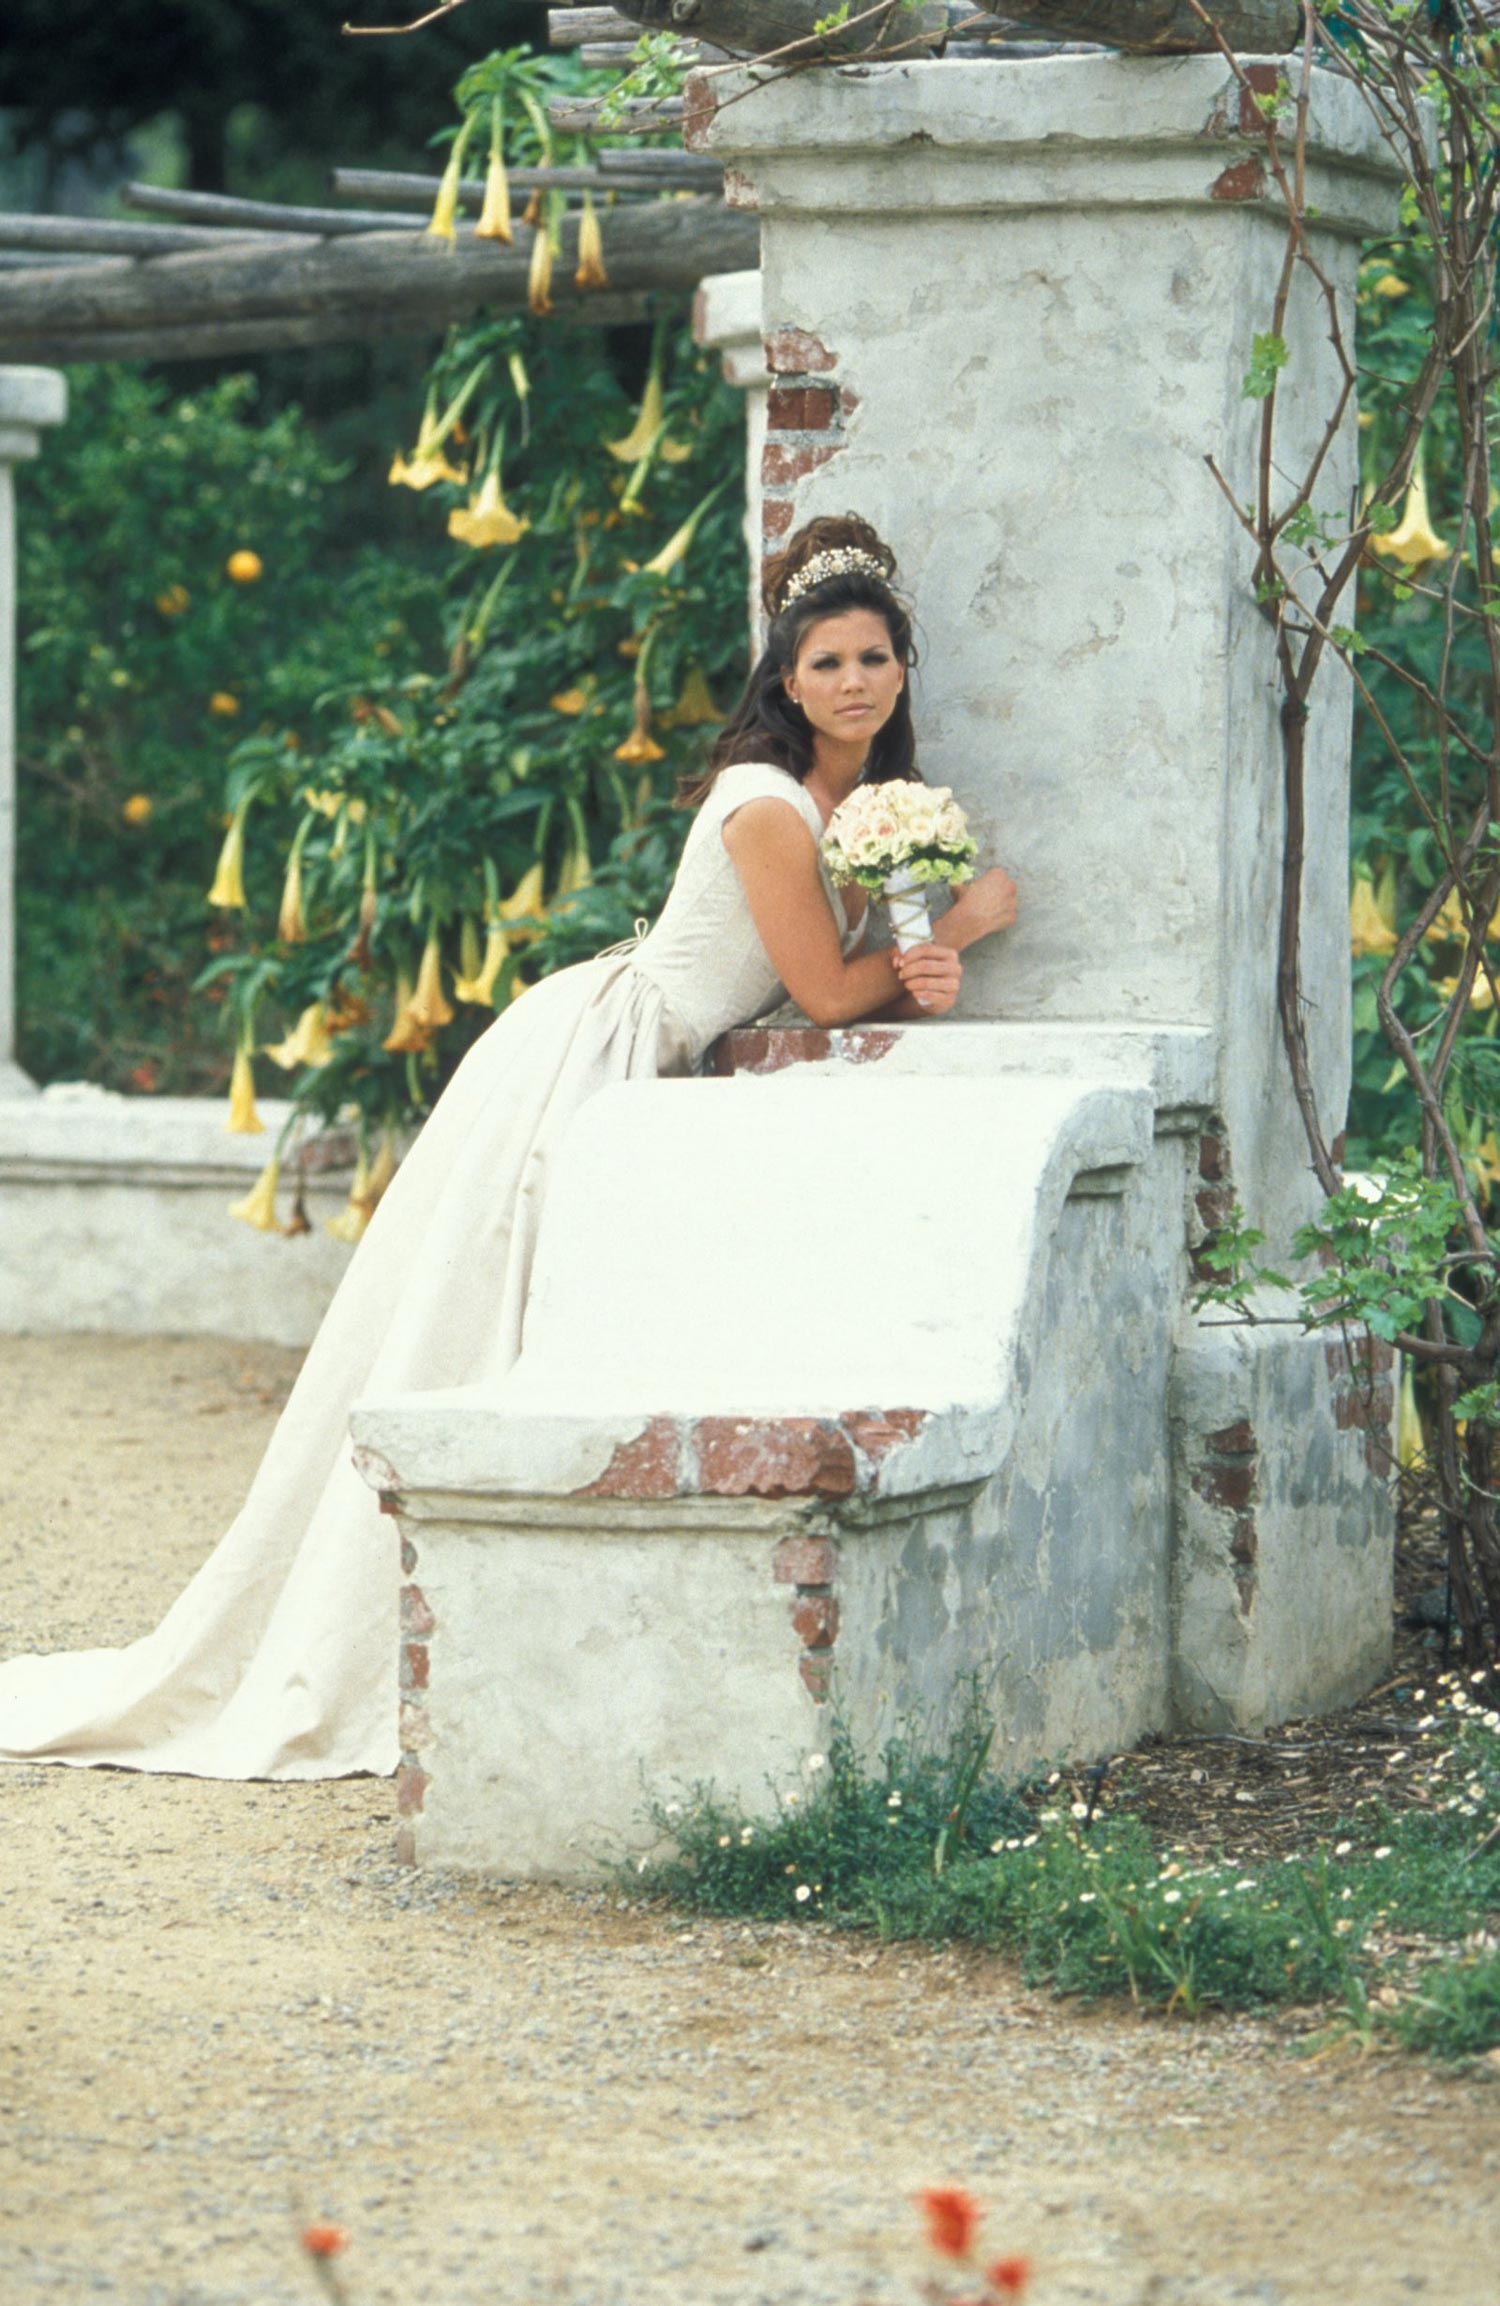 charisma-carpenter-L.A.-bride-magazine-photoshoot-hq-04-1500.jpg